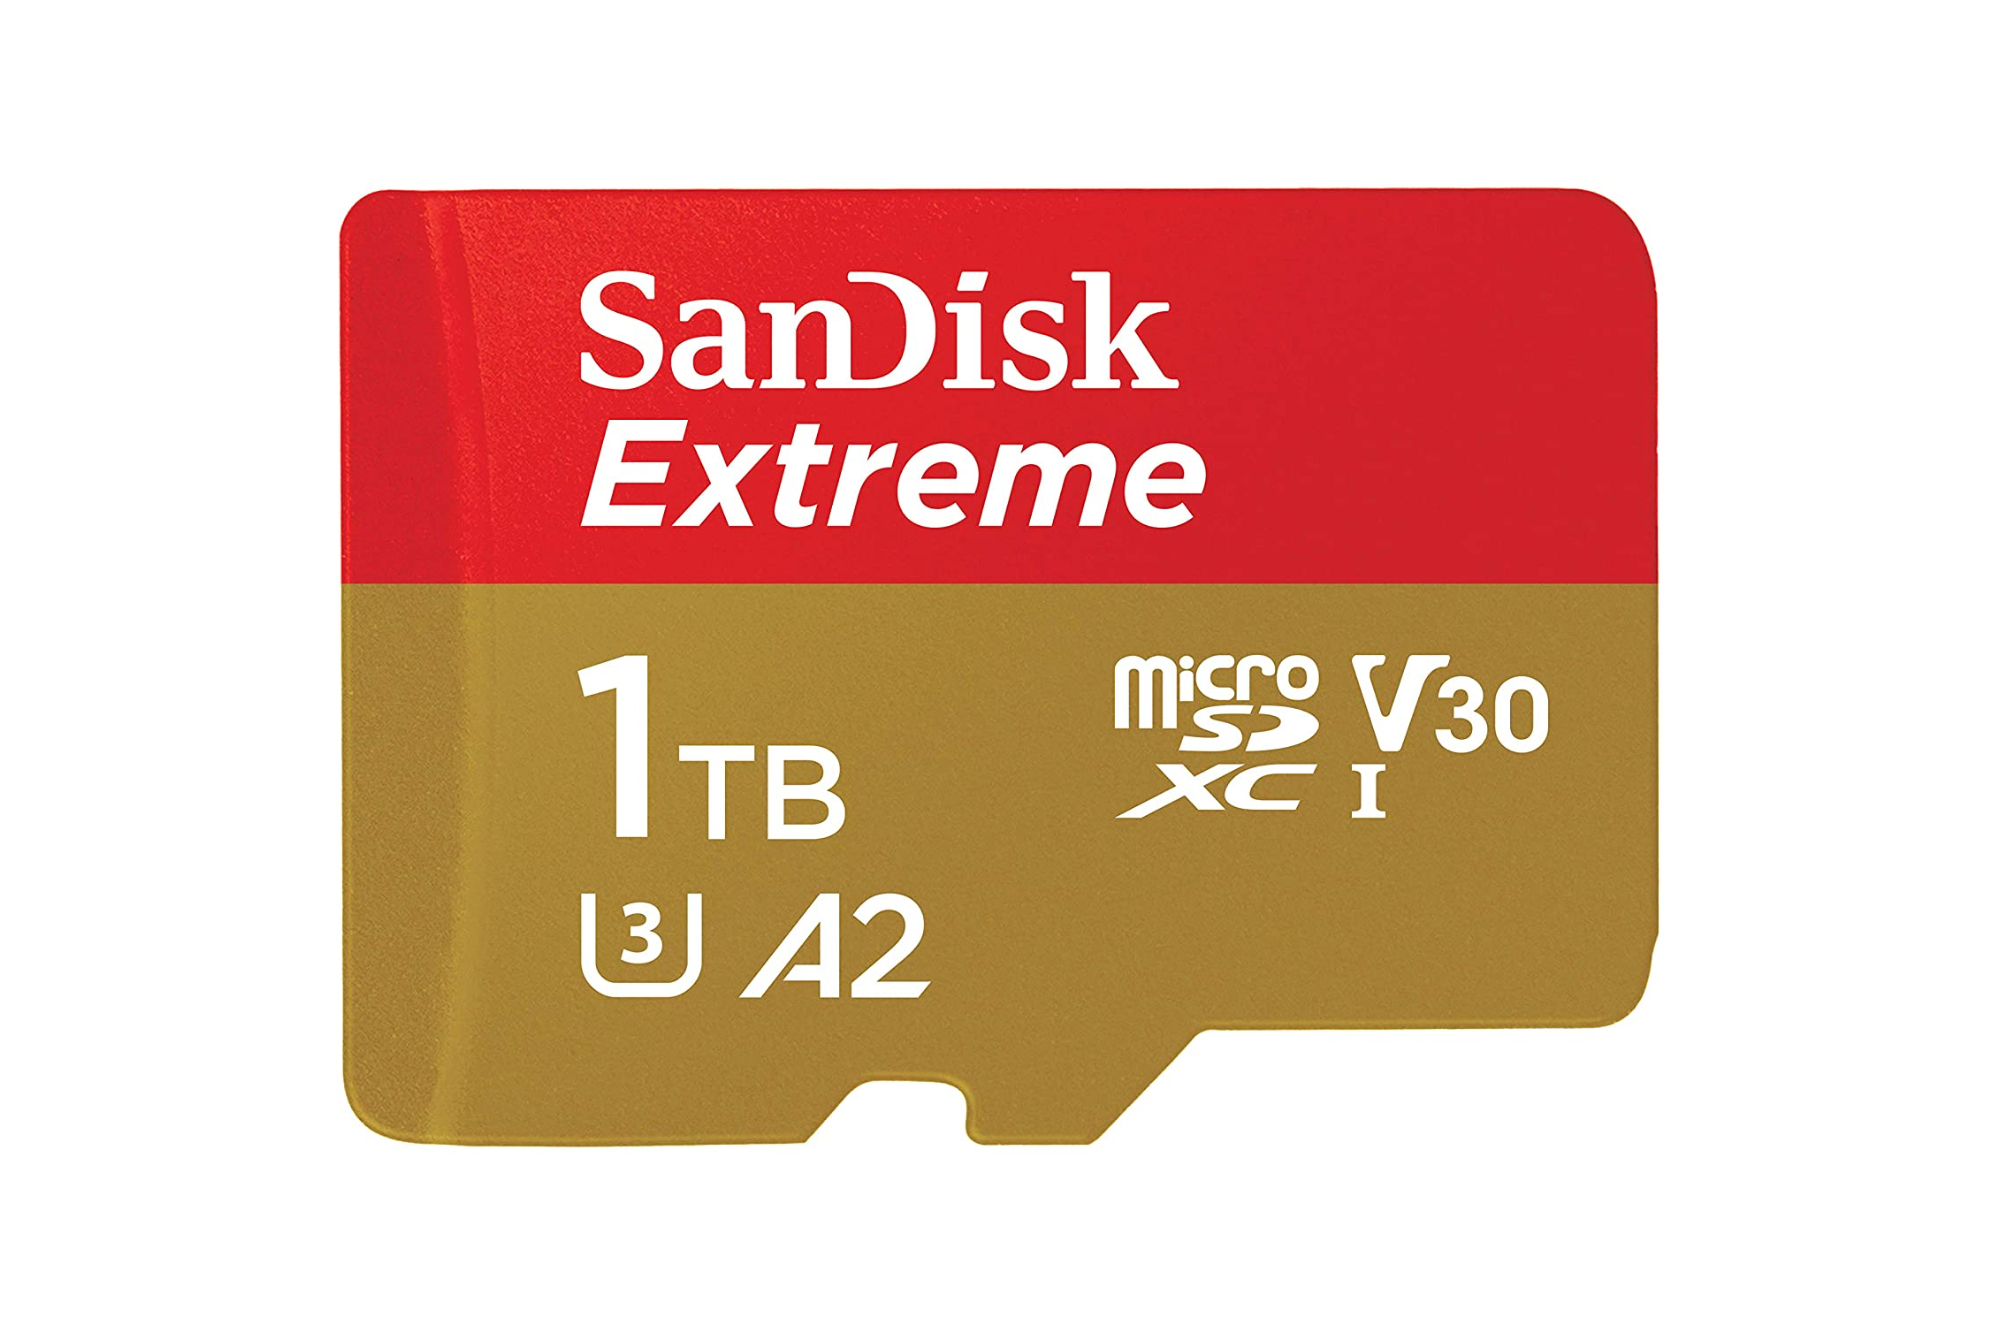 SAMSUNG PRO Plus SD Memory Card 128Go BE (P)